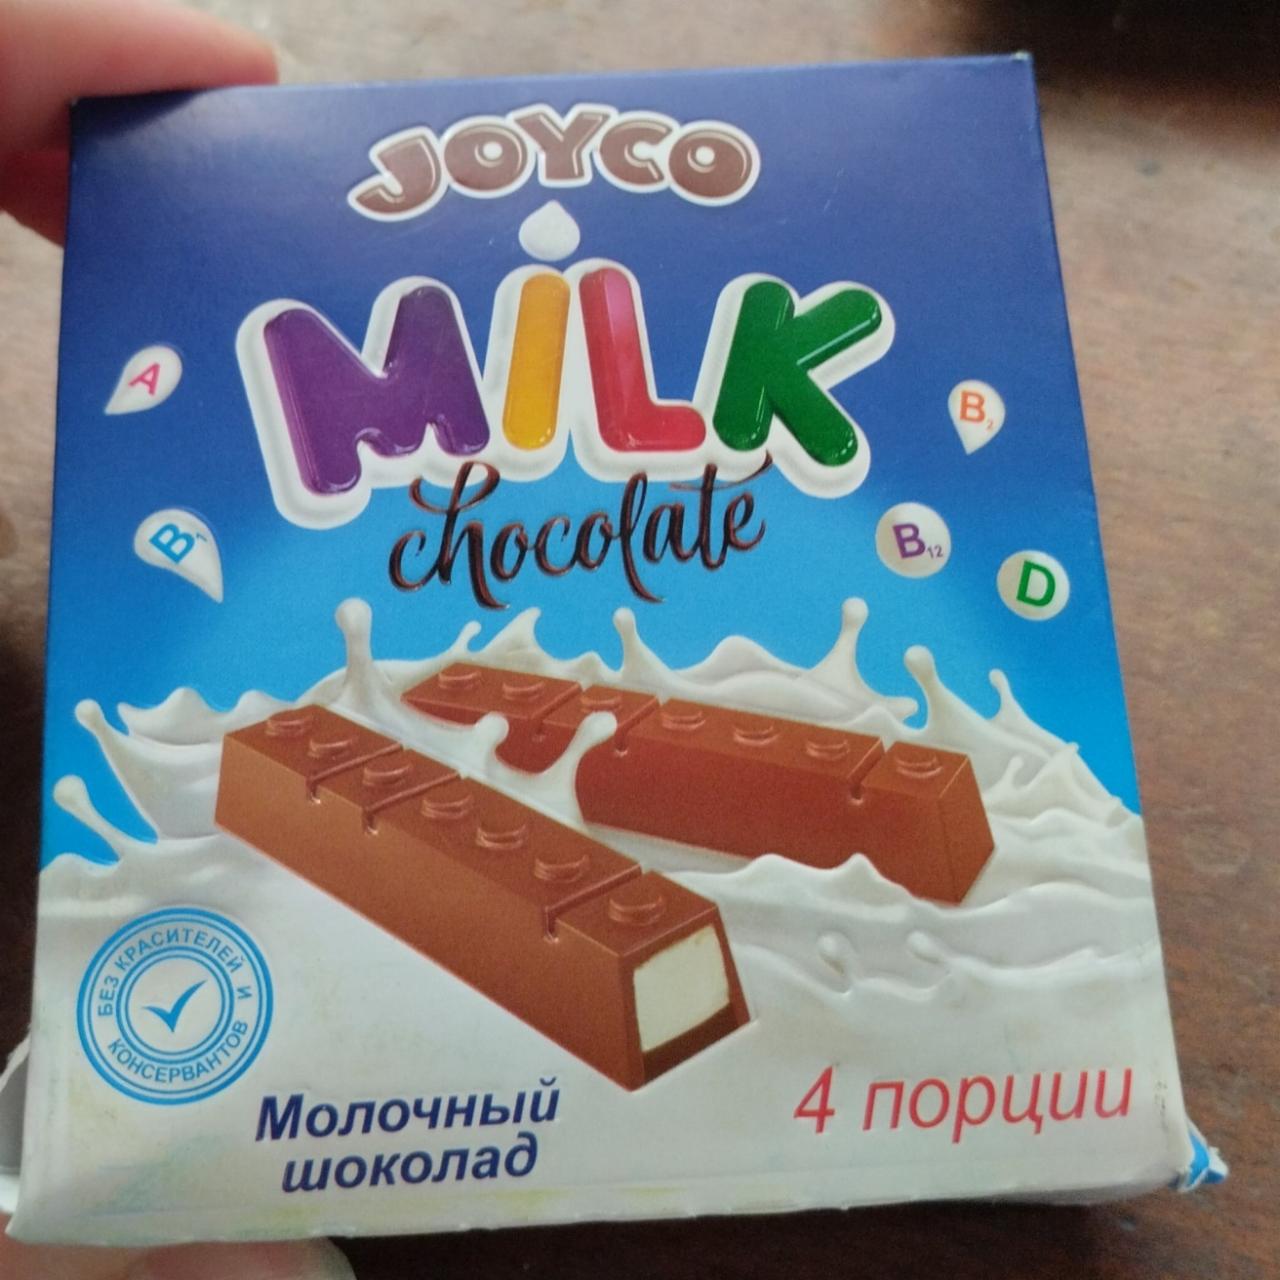 Фото - молочный шоколад с молочной начинкой Joyco